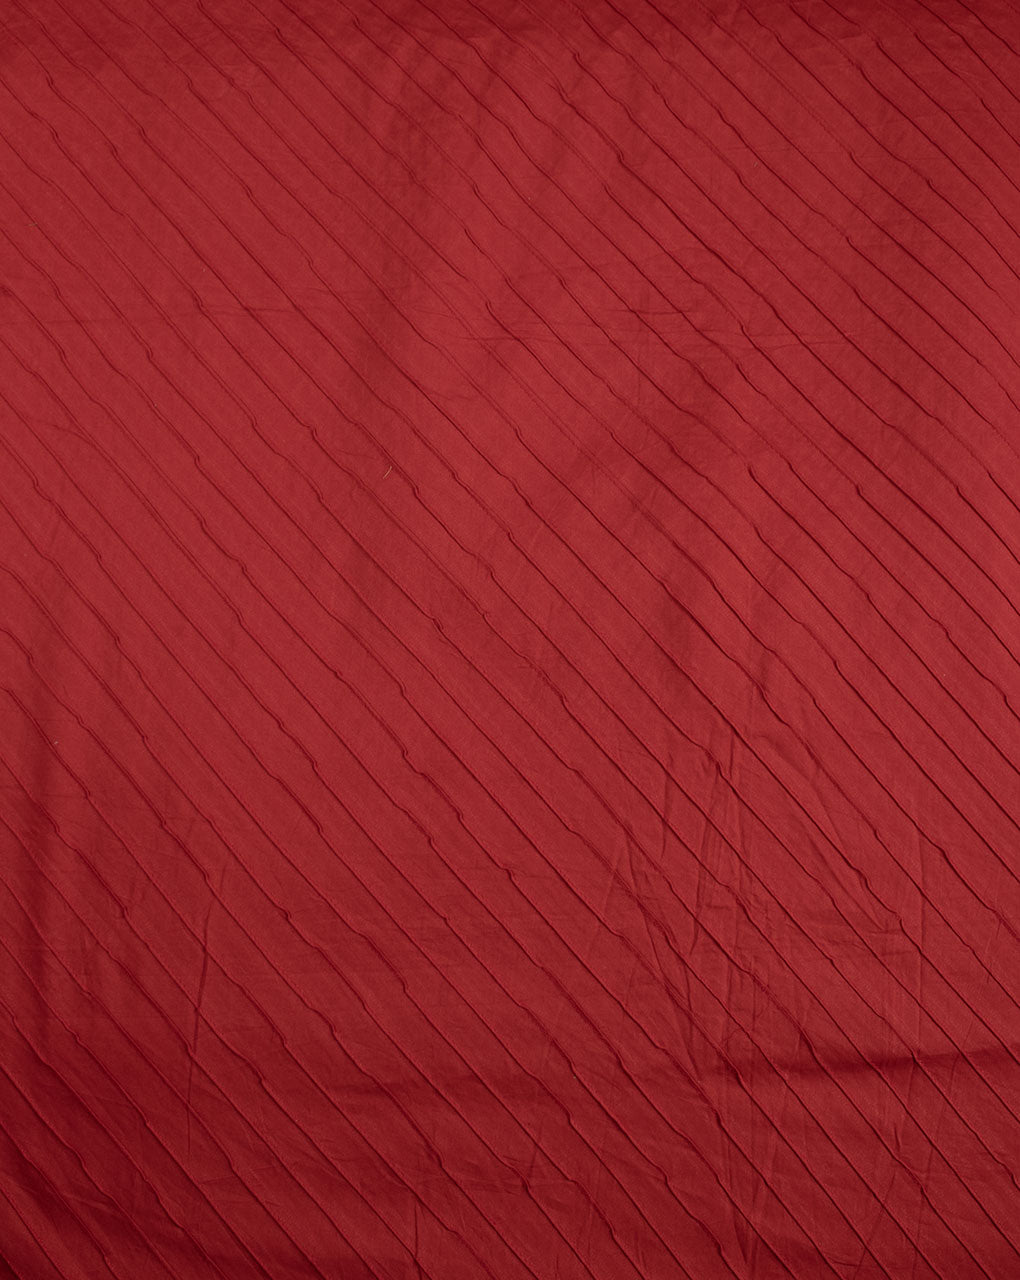 Red Pin-Tucks Cotton Fabric ( Width 40 Inch ) - Fabriclore.com